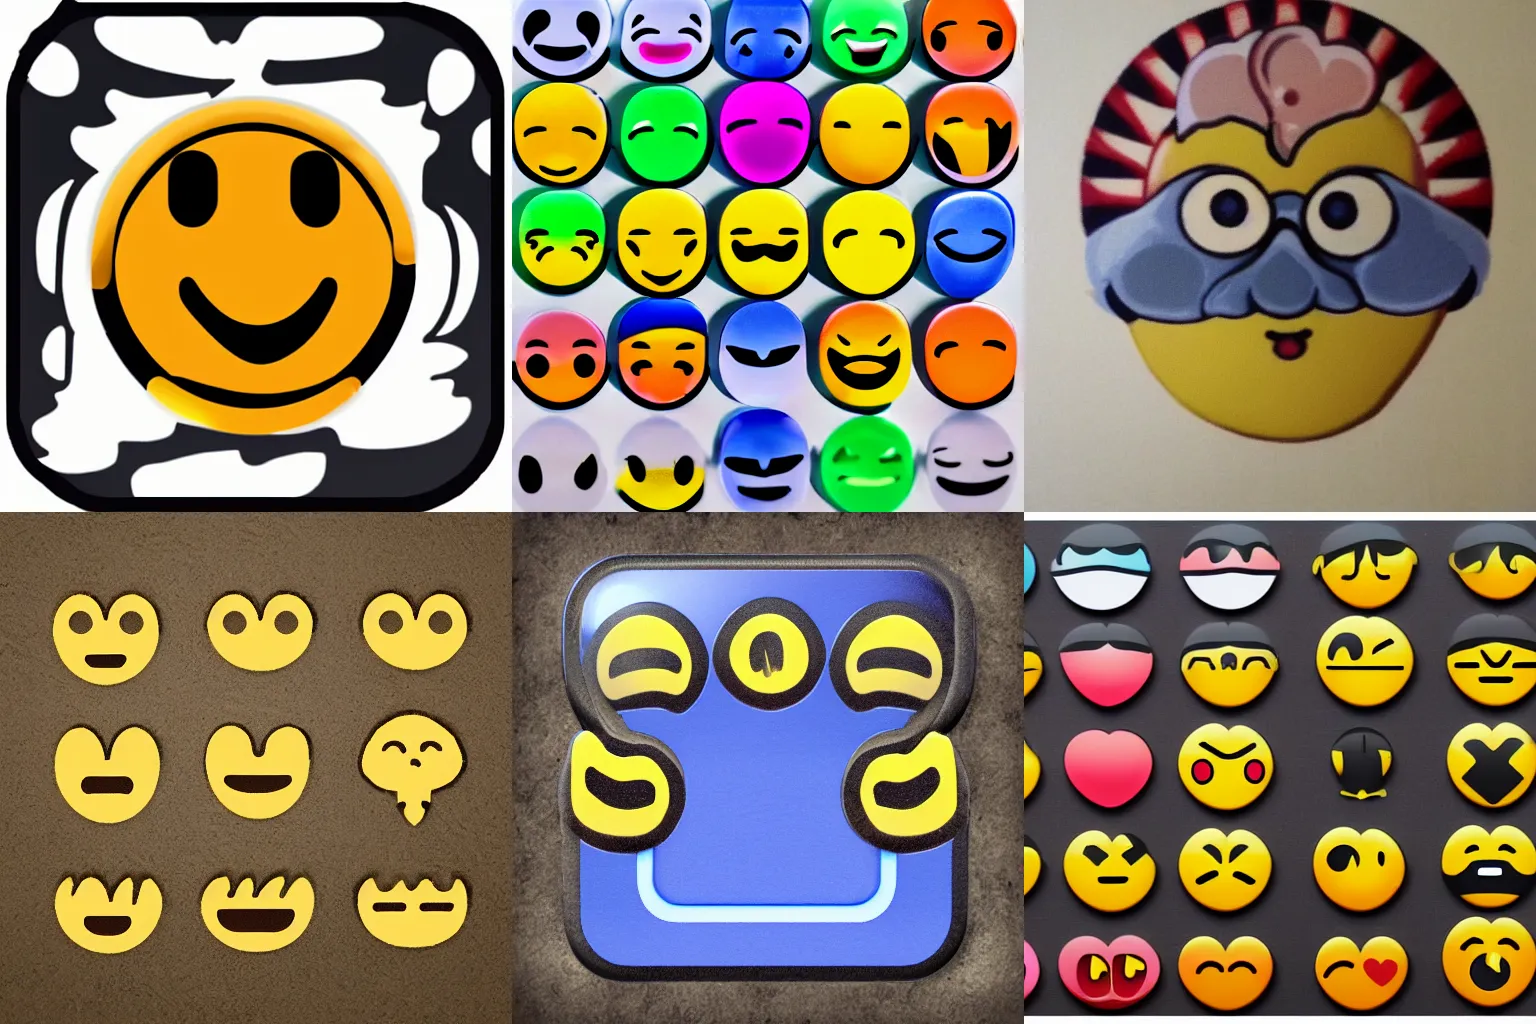 Prompt: one emoji